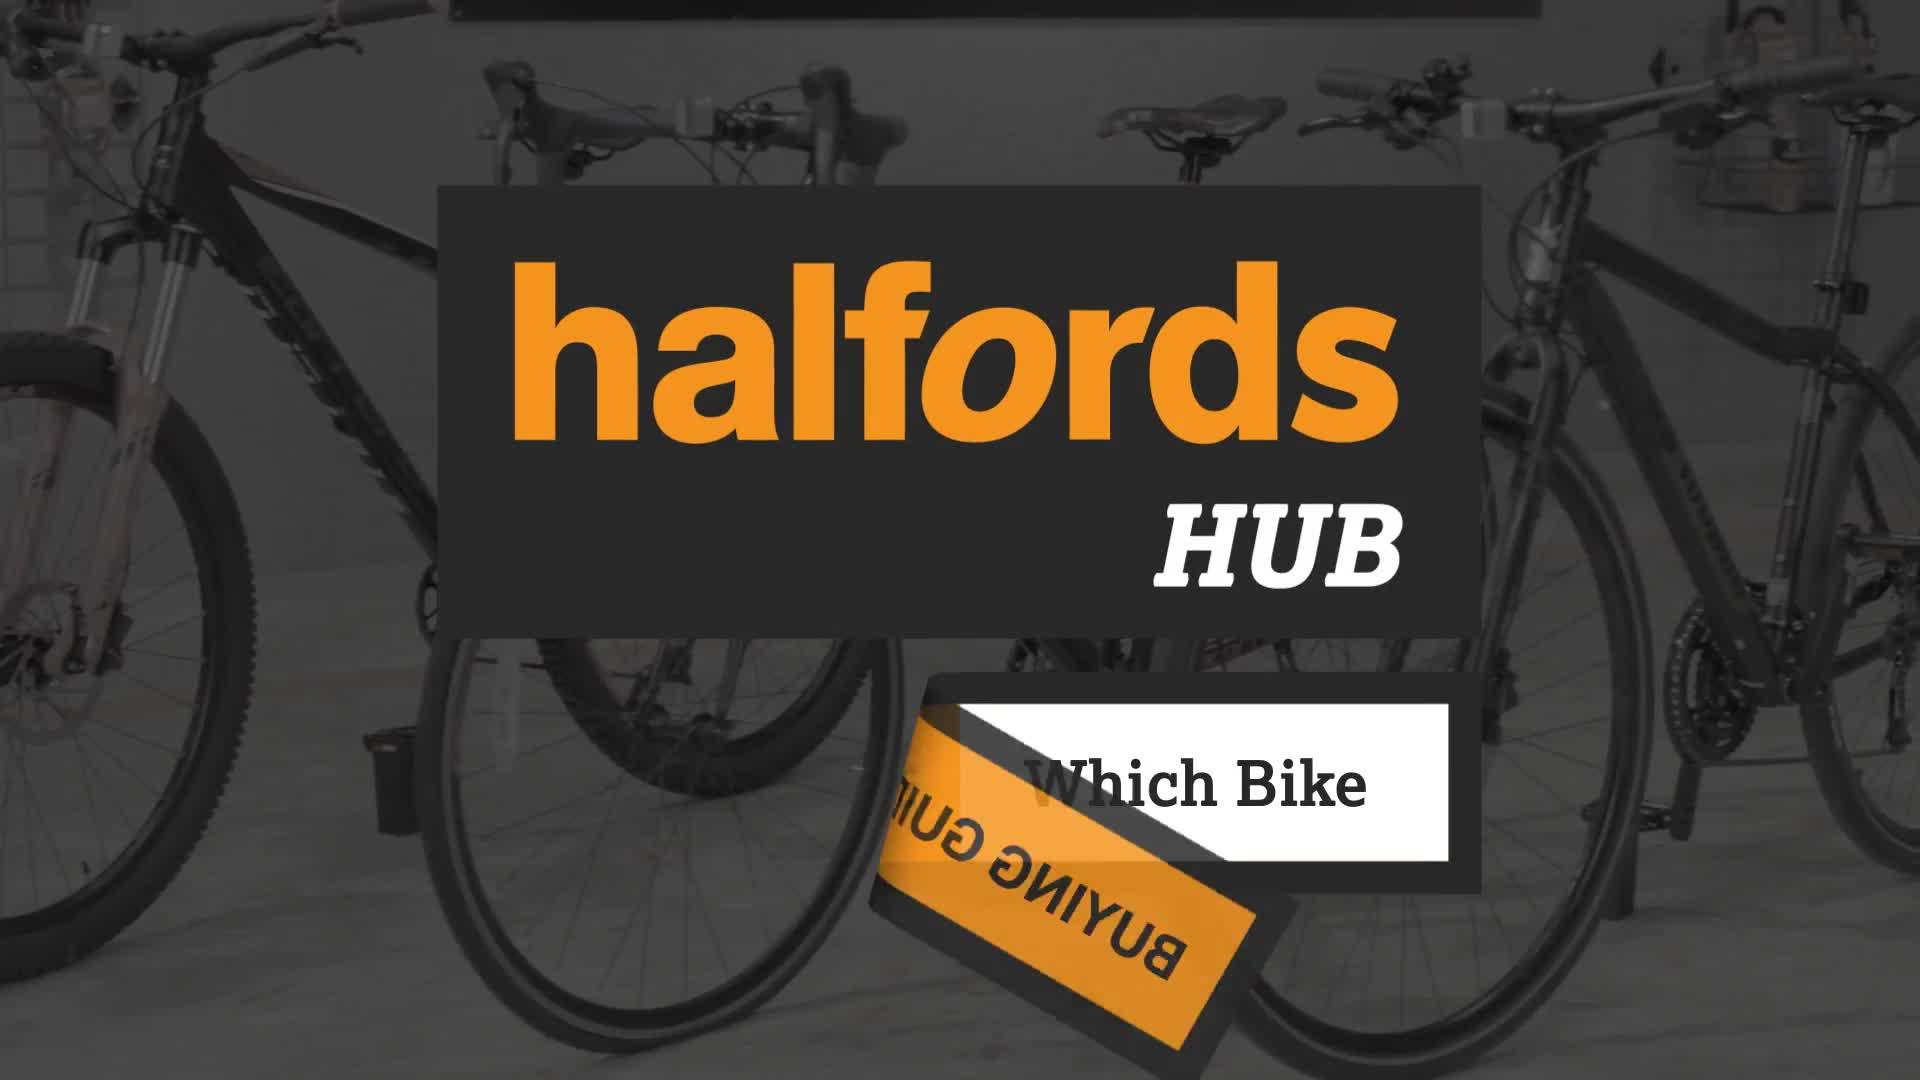 do halfords fix bikes